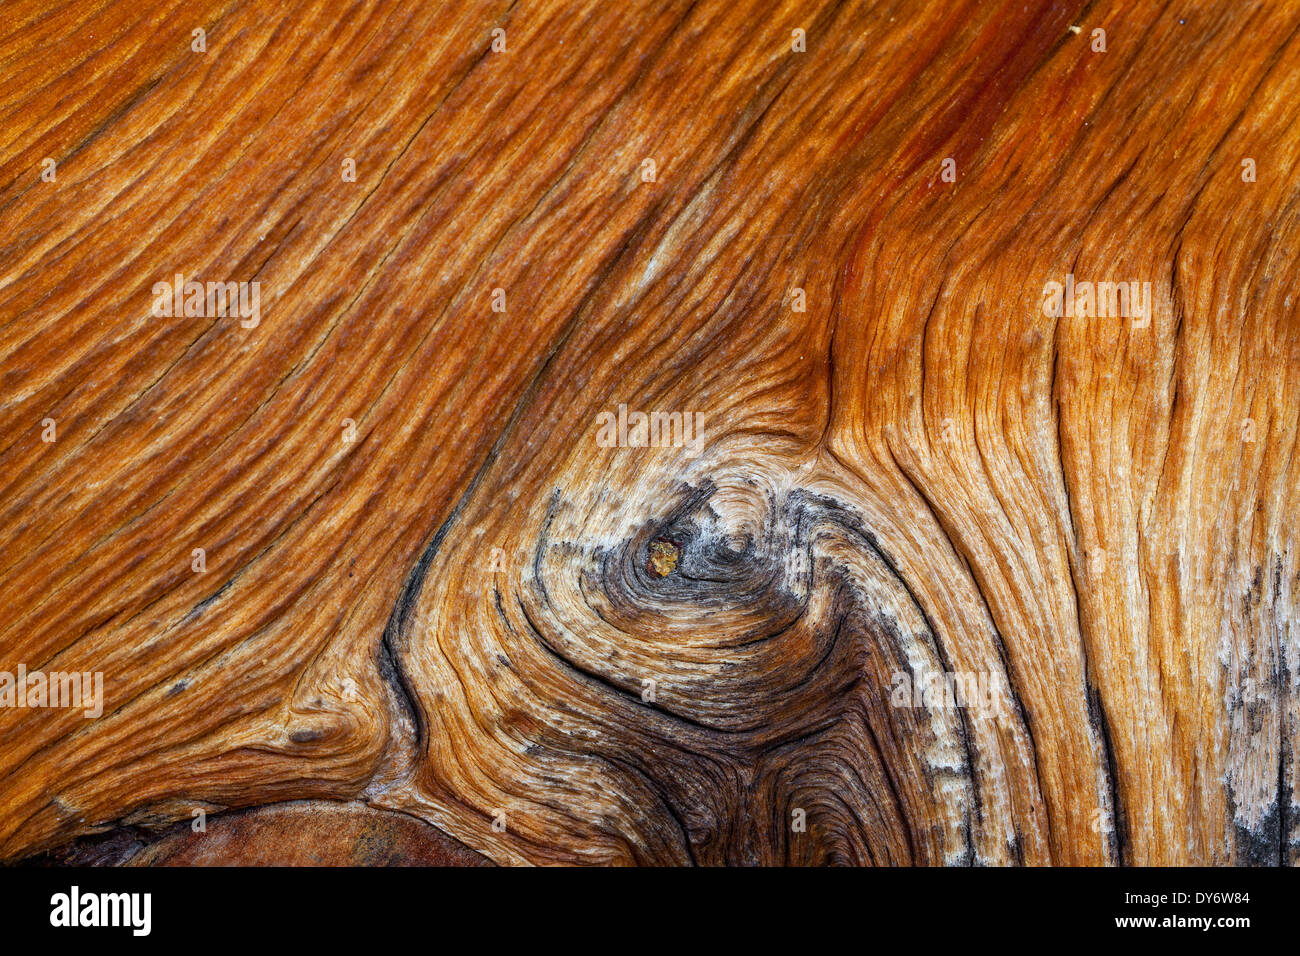 Swiss pine / Swiss stone pine / Arolla pine (Pinus cembra), close up showing wood grain pattern and knot Stock Photo